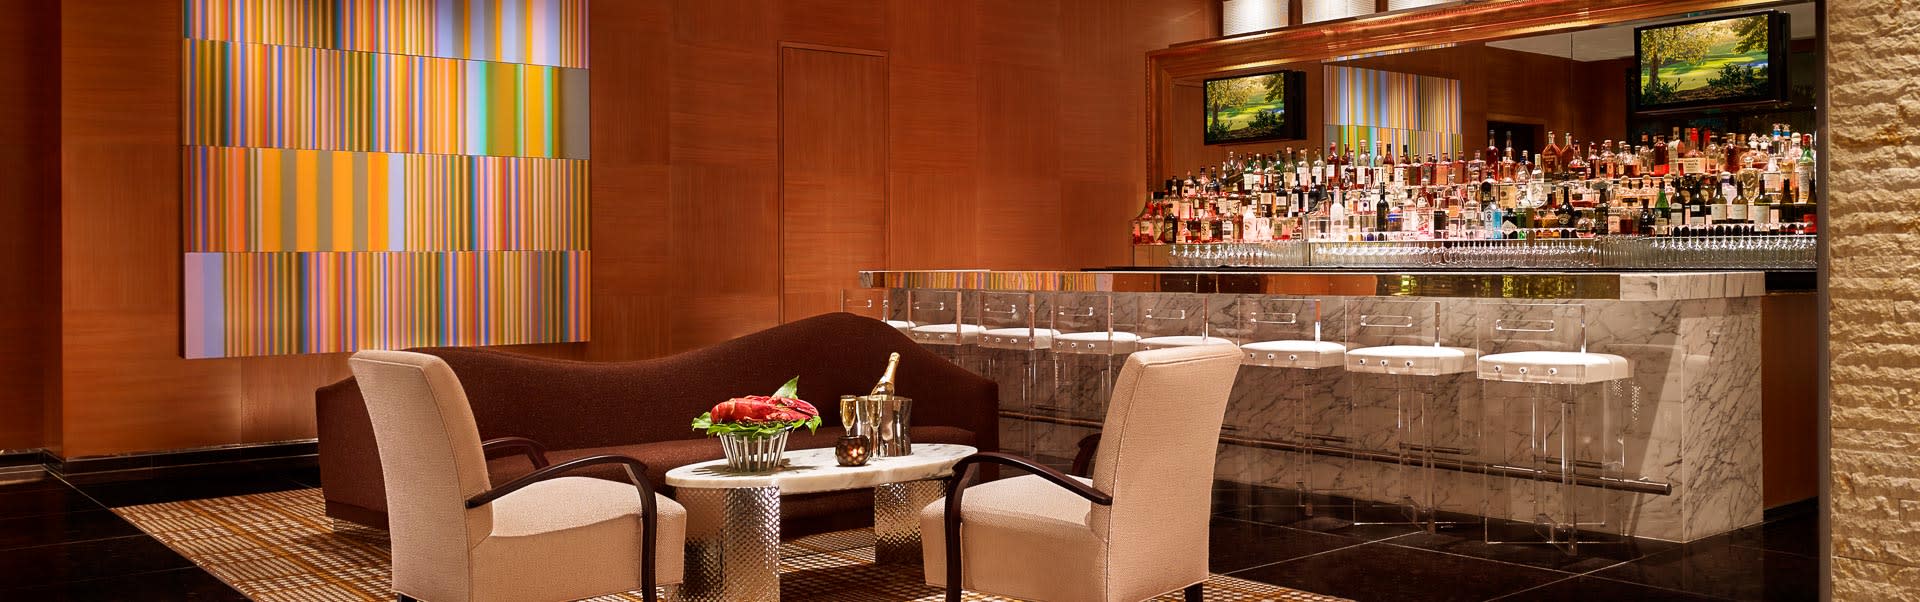 Best steakhouse bar seating for solo traveler | Vegas Message Board